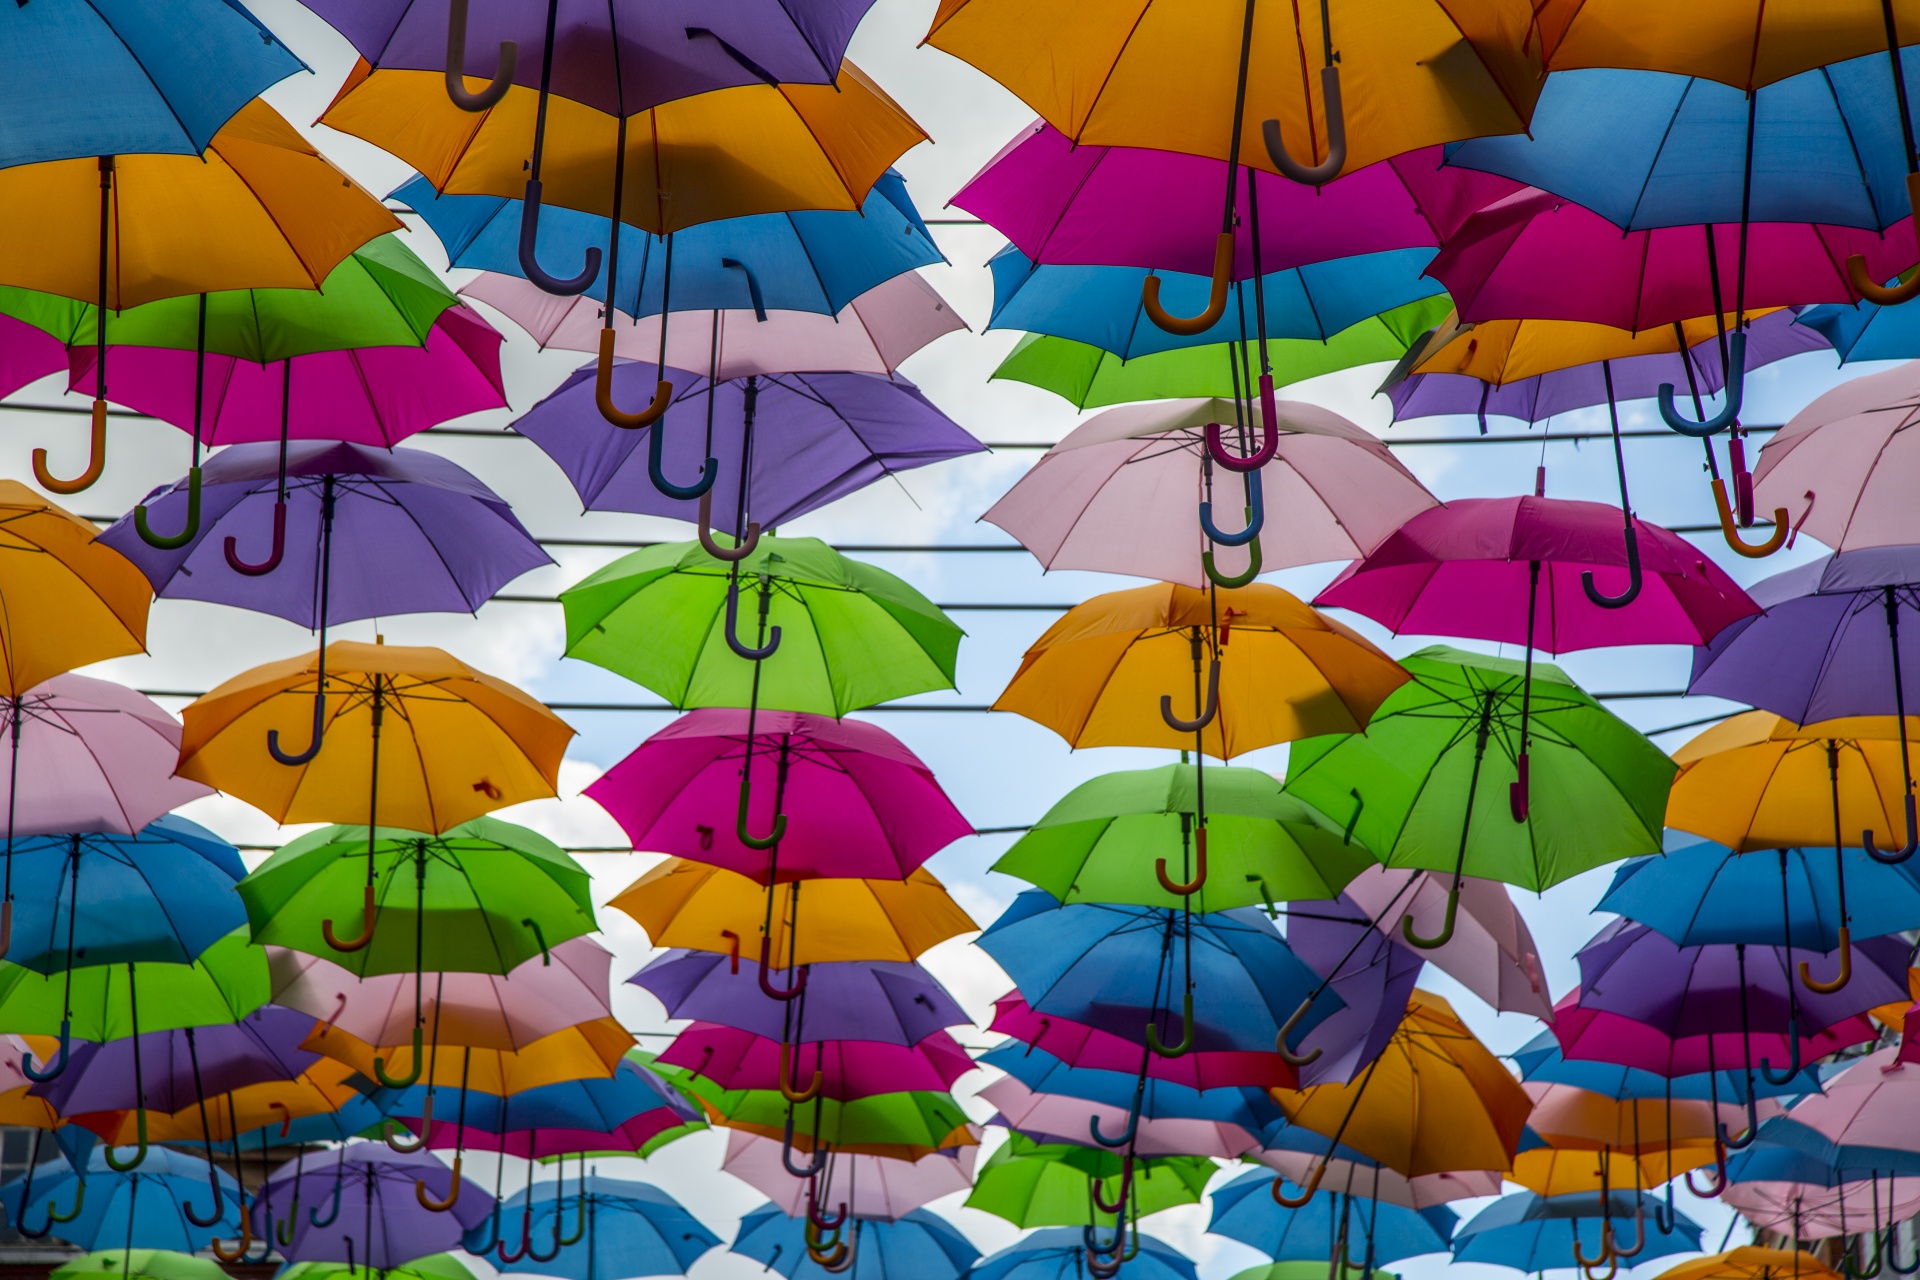 Umbrella Street In France